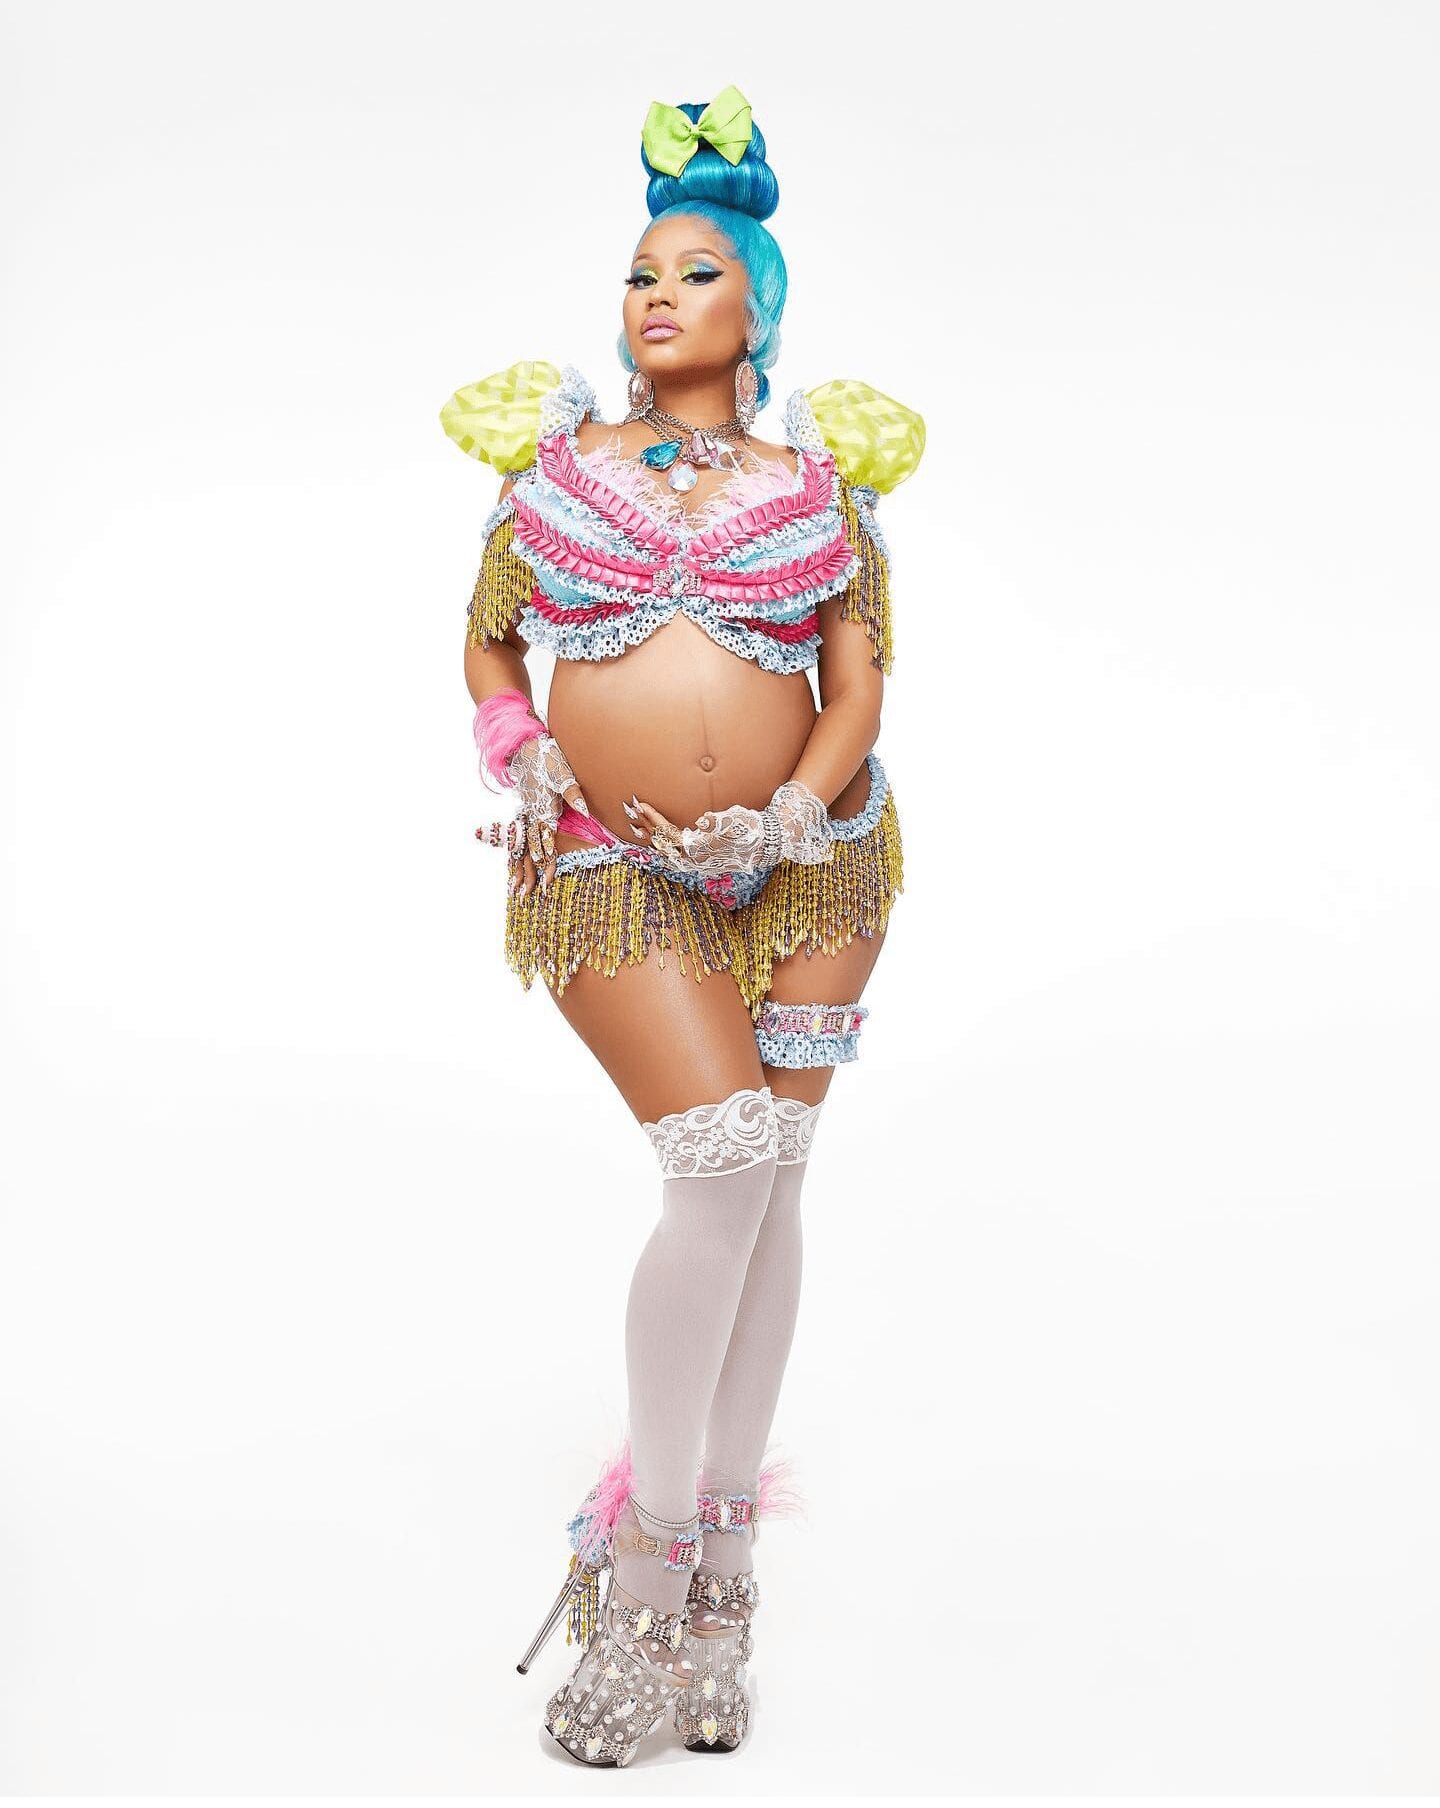 nicki minaj grossesse 1 - Nicki Minaj dévoile officiellement sa grossesse au public (Photos)